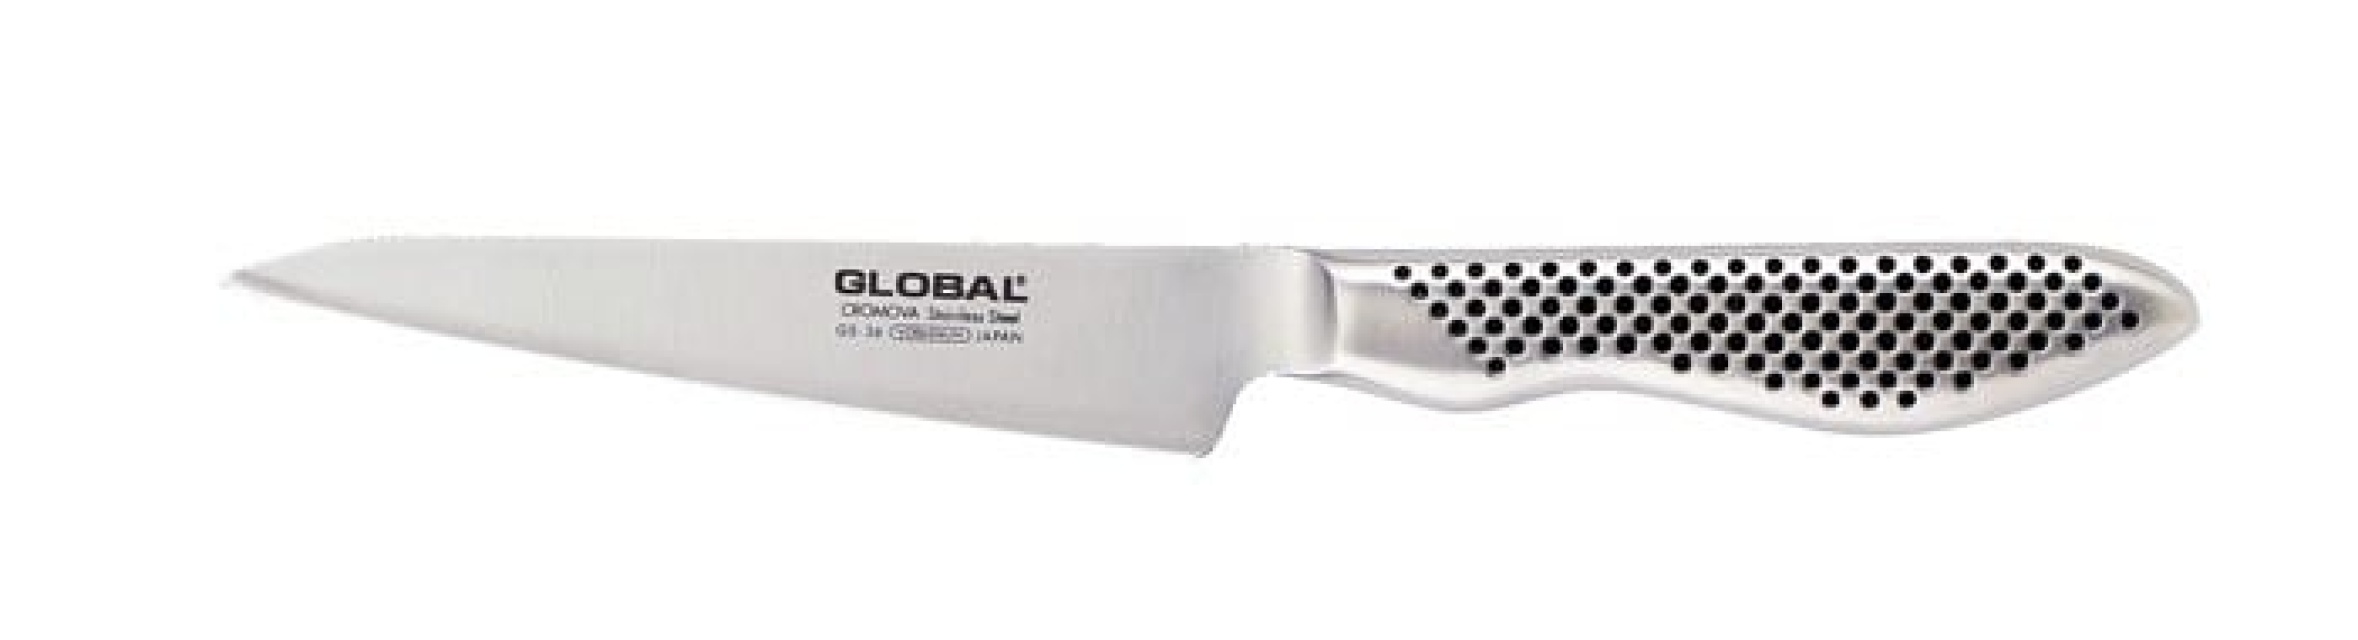 GS-36 Universalkniv 11 cm - Global